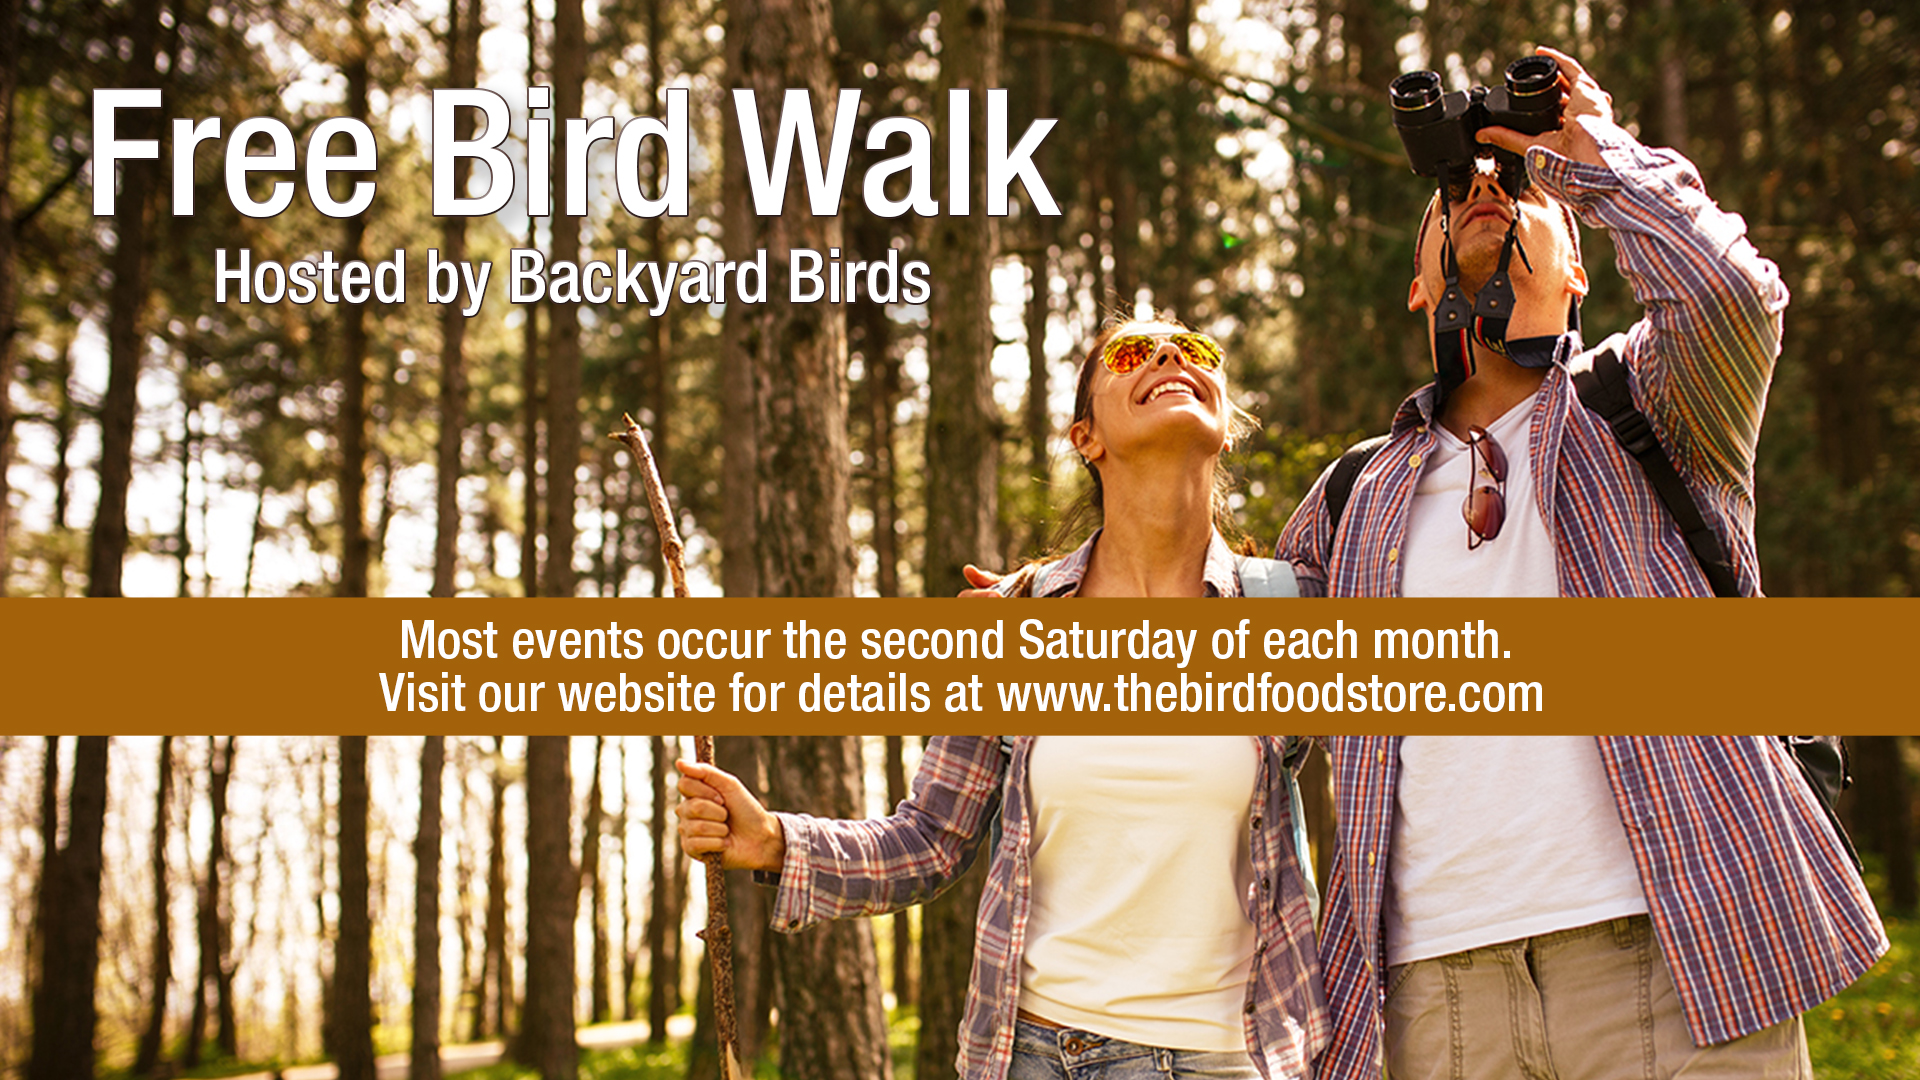 Backyard Birds - Bird Walk Fall Events